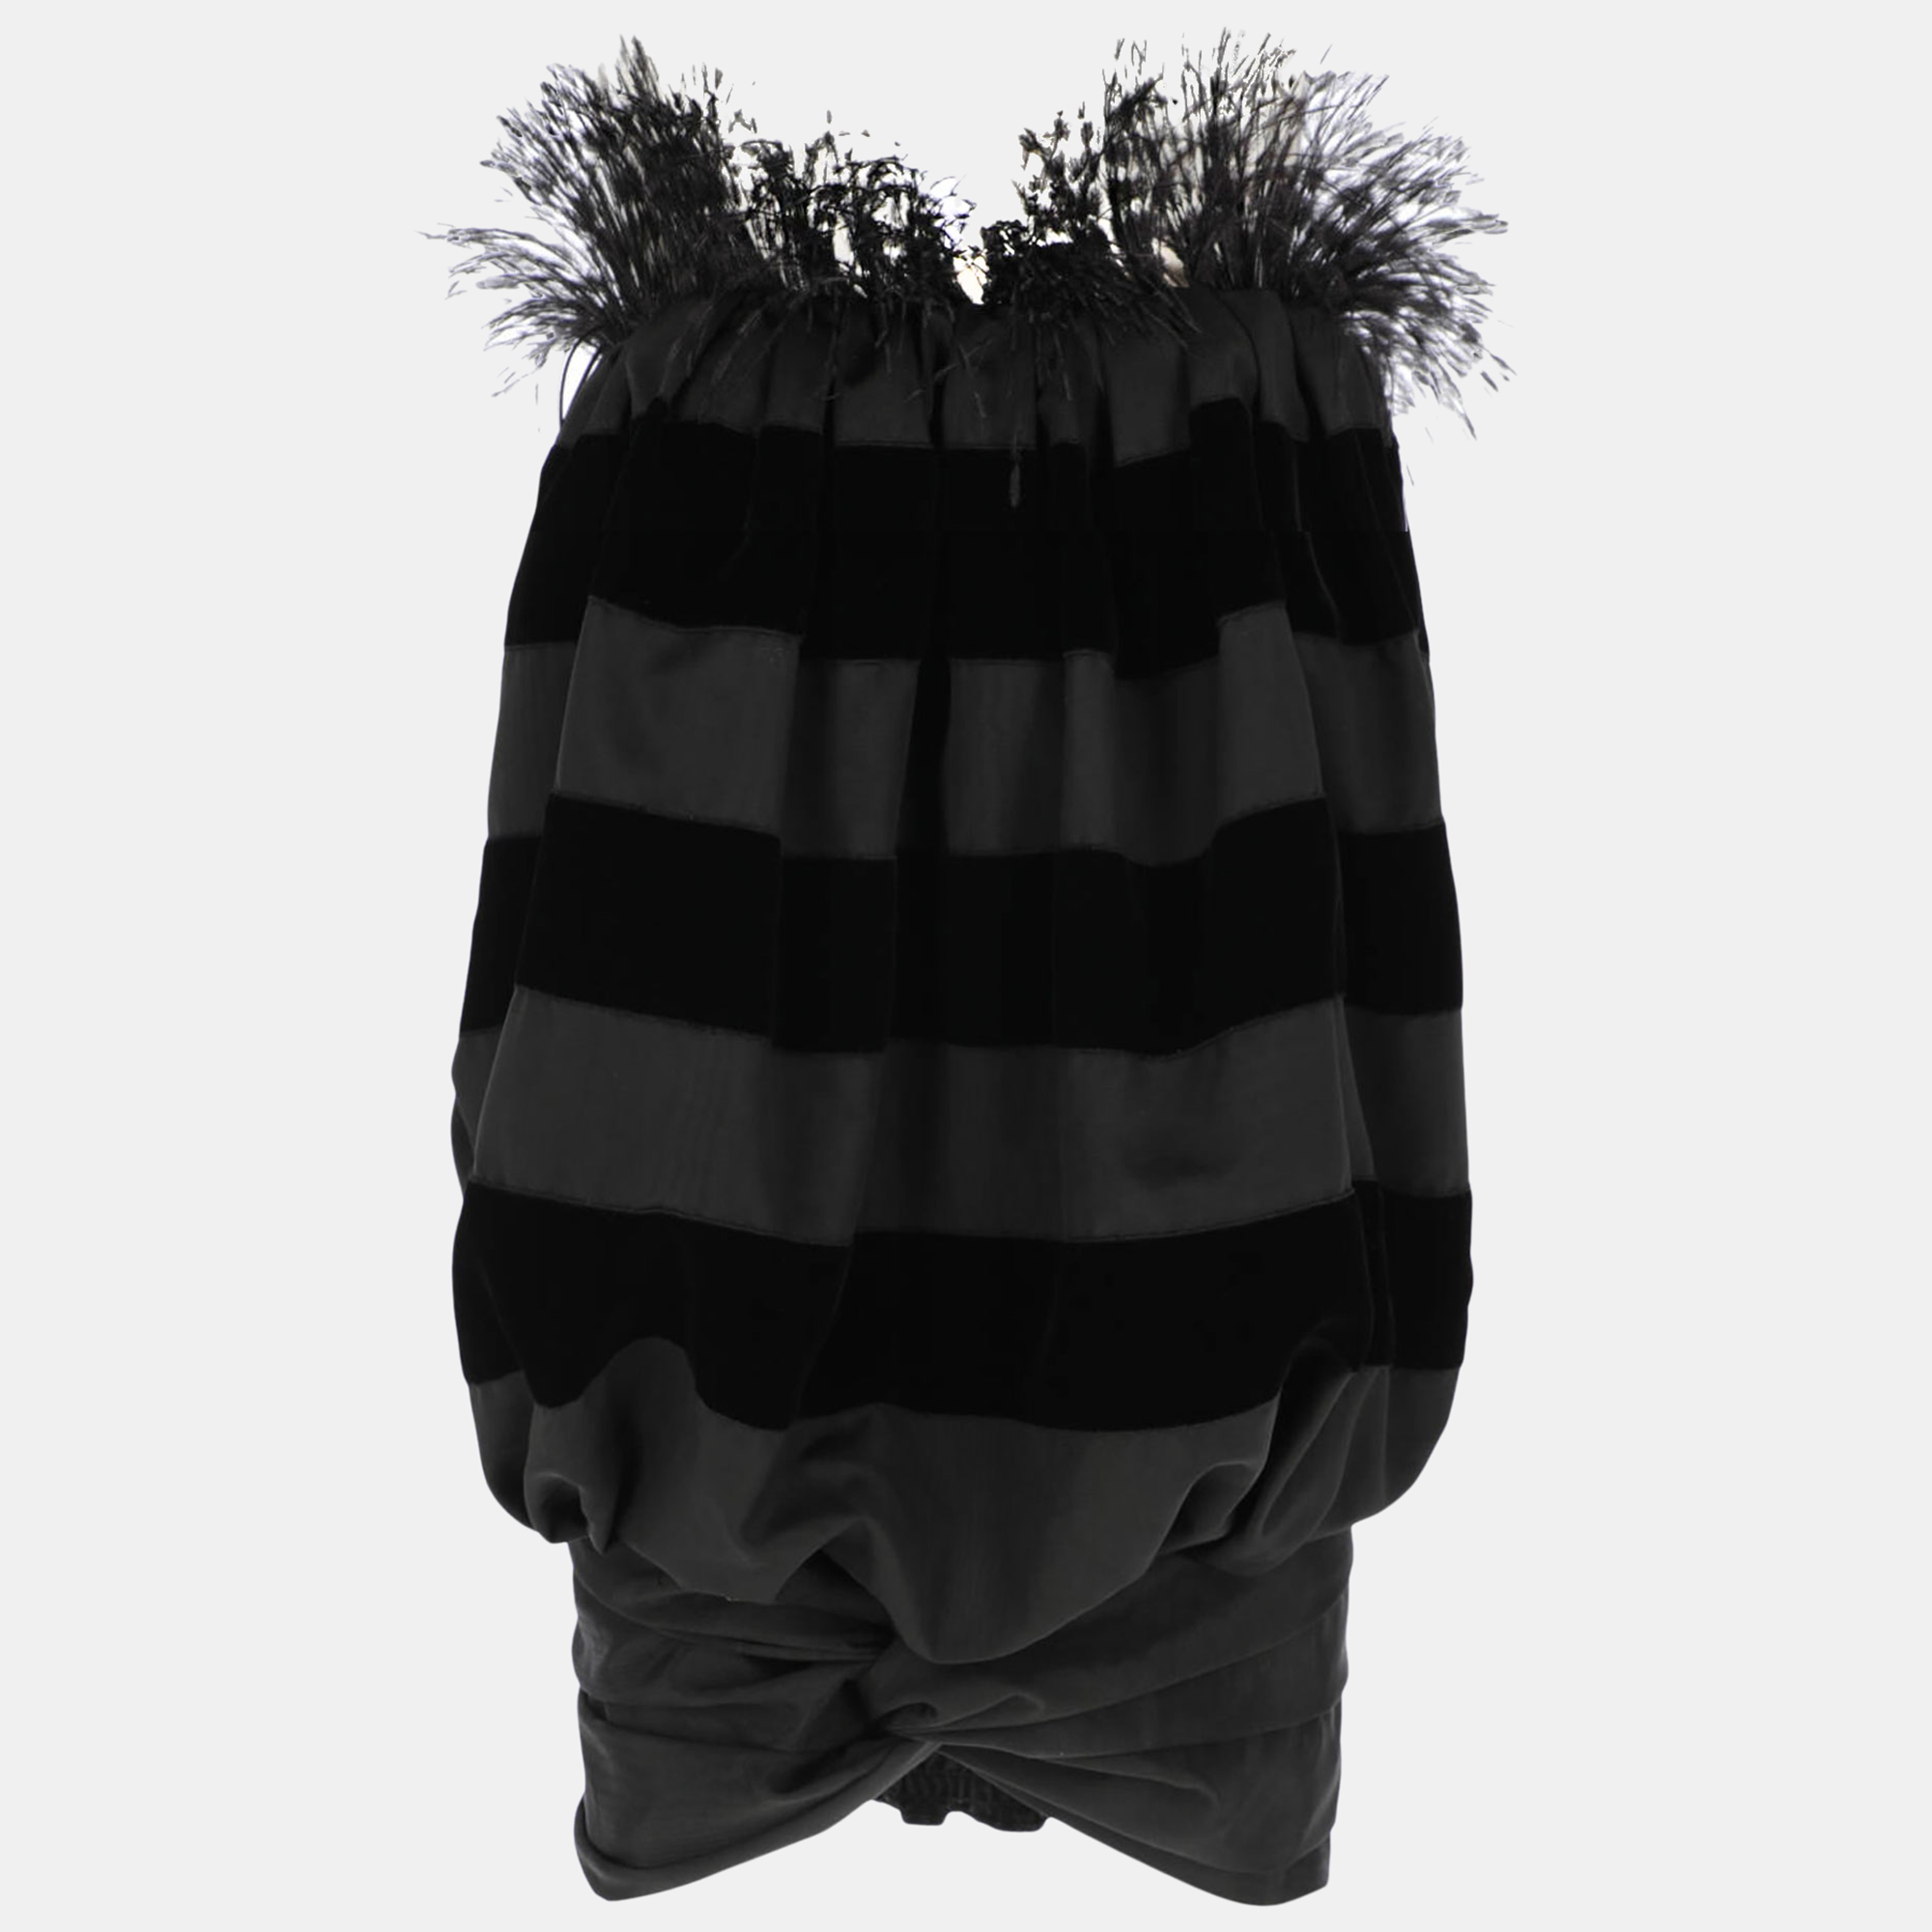 Saint Laurent Women's Synthetic Fibers Mini Dress - Black - S